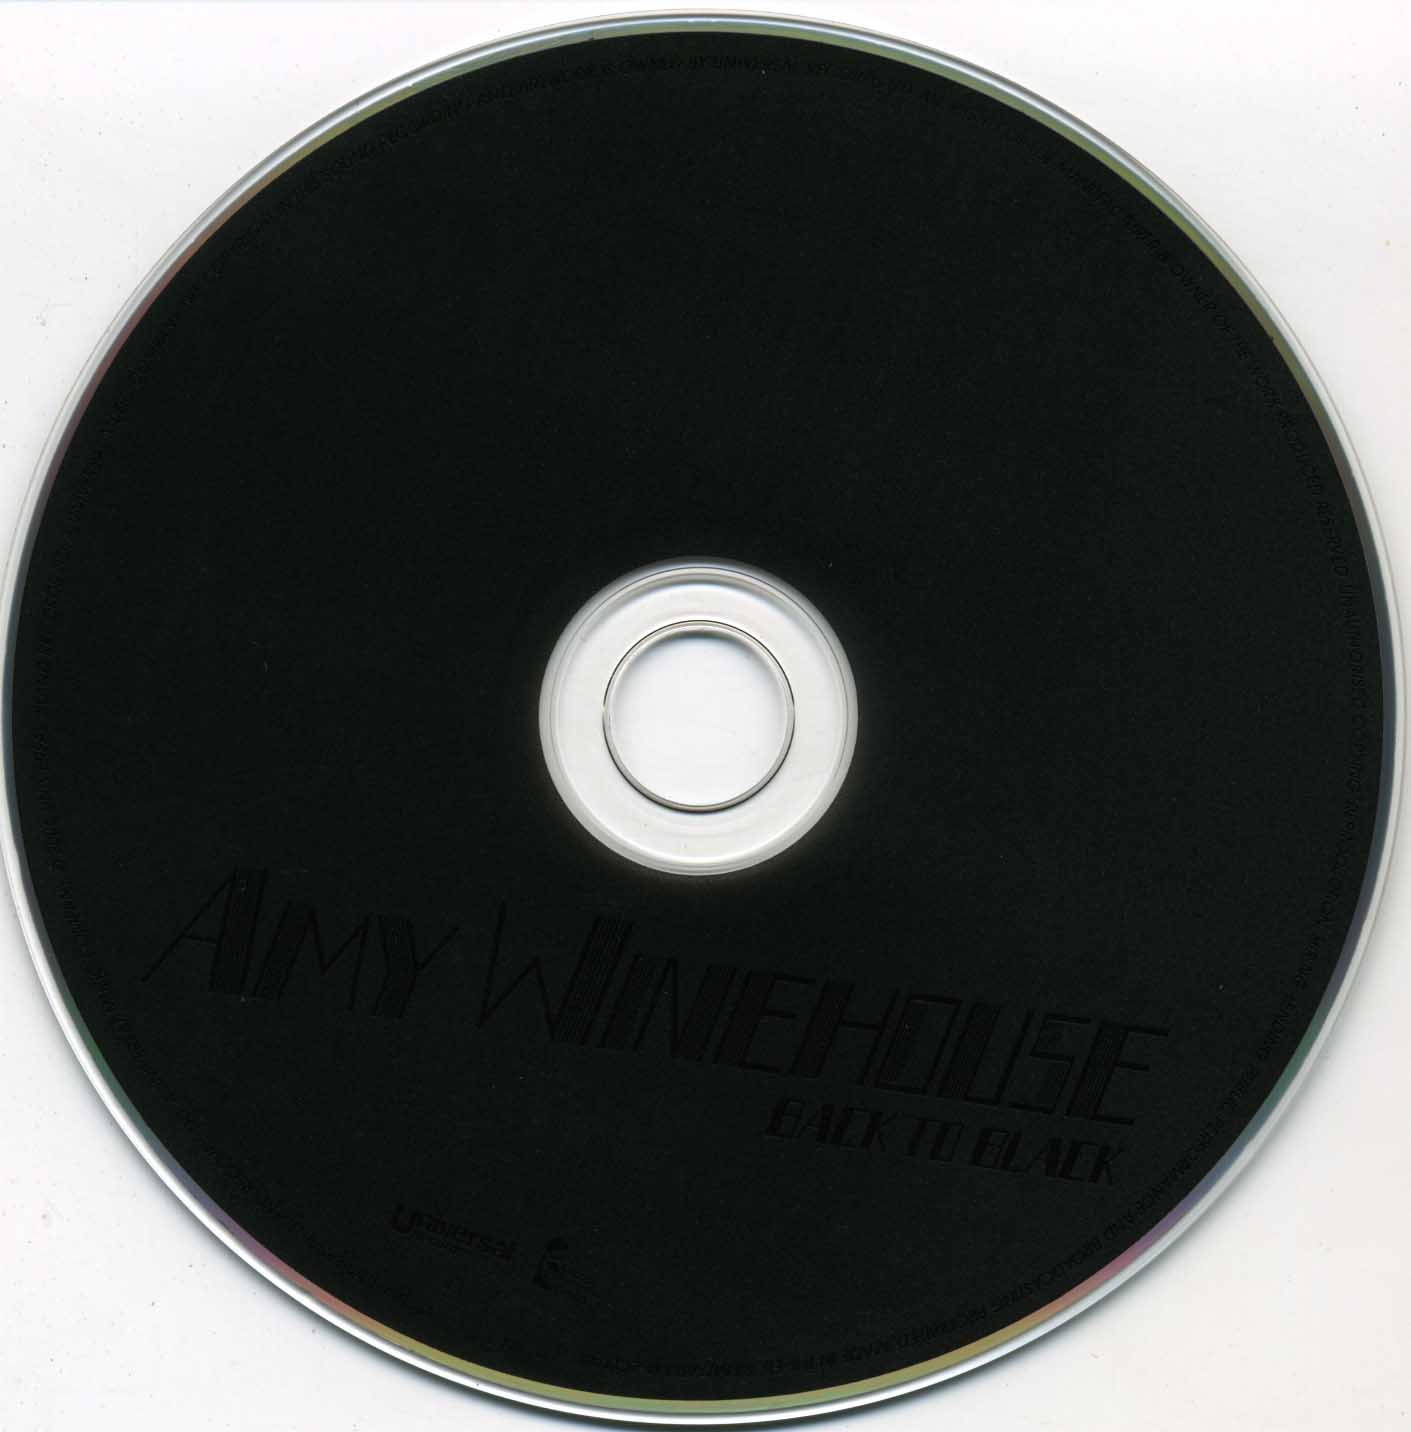 Amy Winehouse - Back to black - cd.jpg